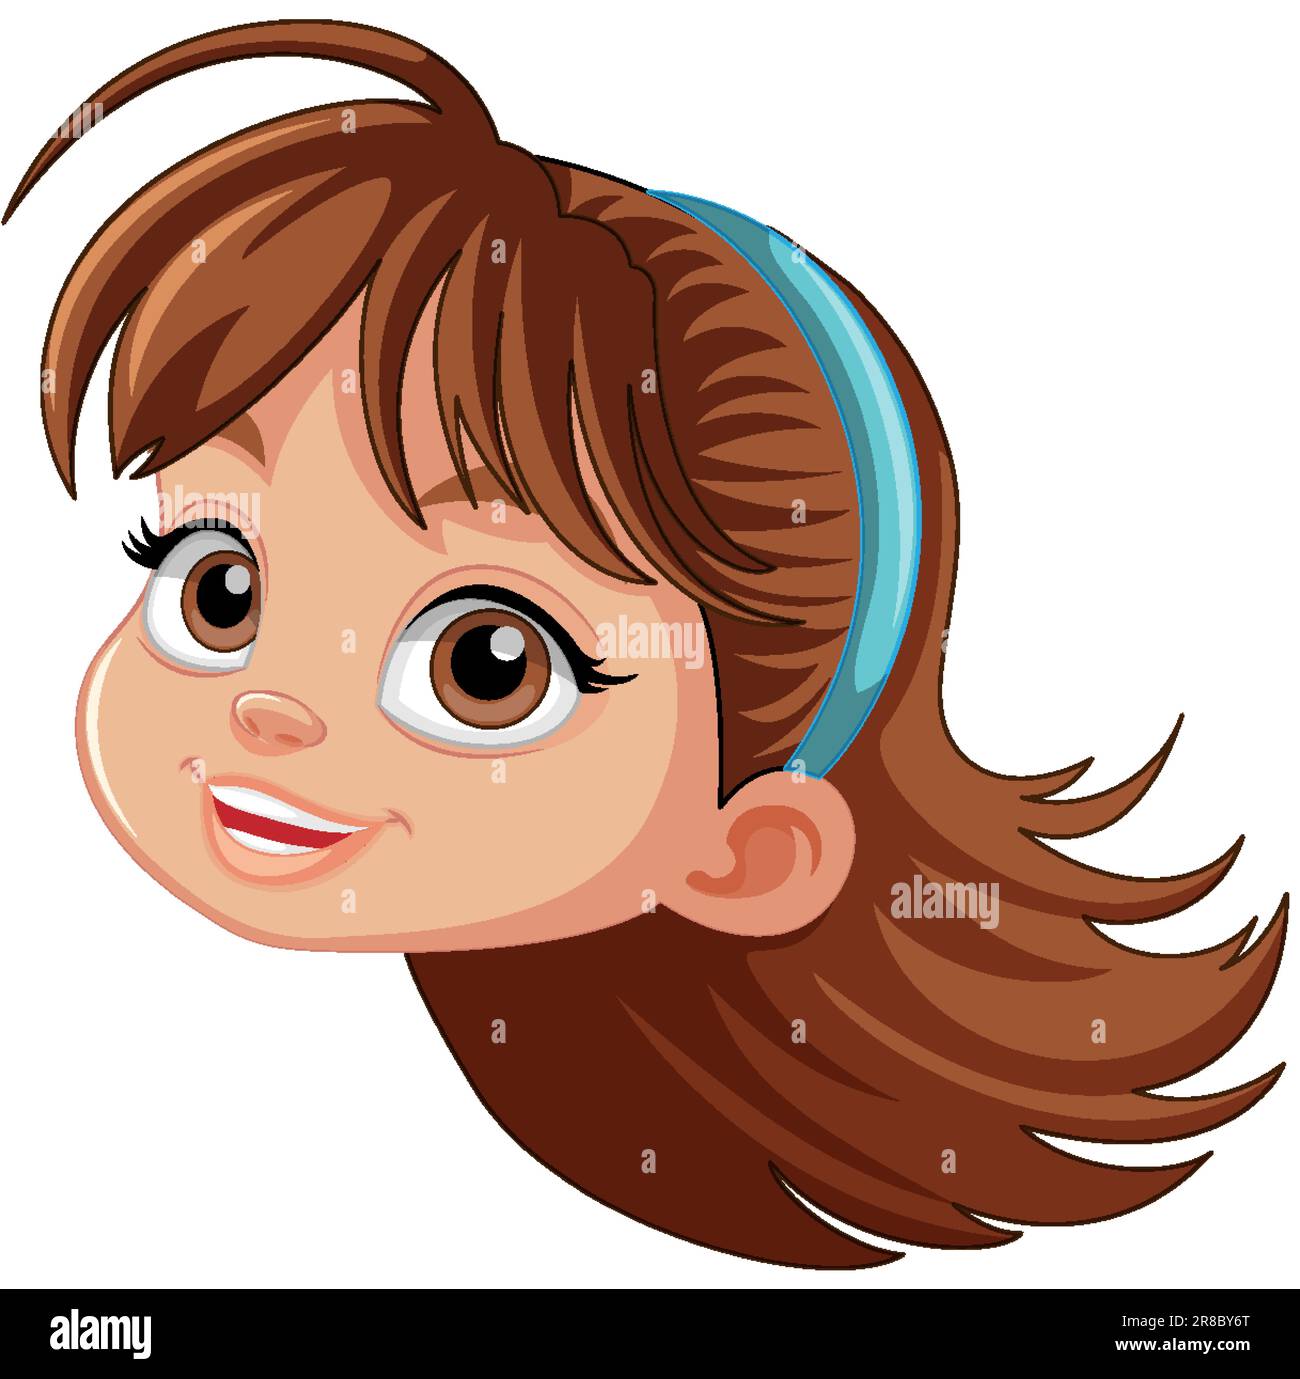 linda chica de dibujos animados con cabello castaño y ojos azules